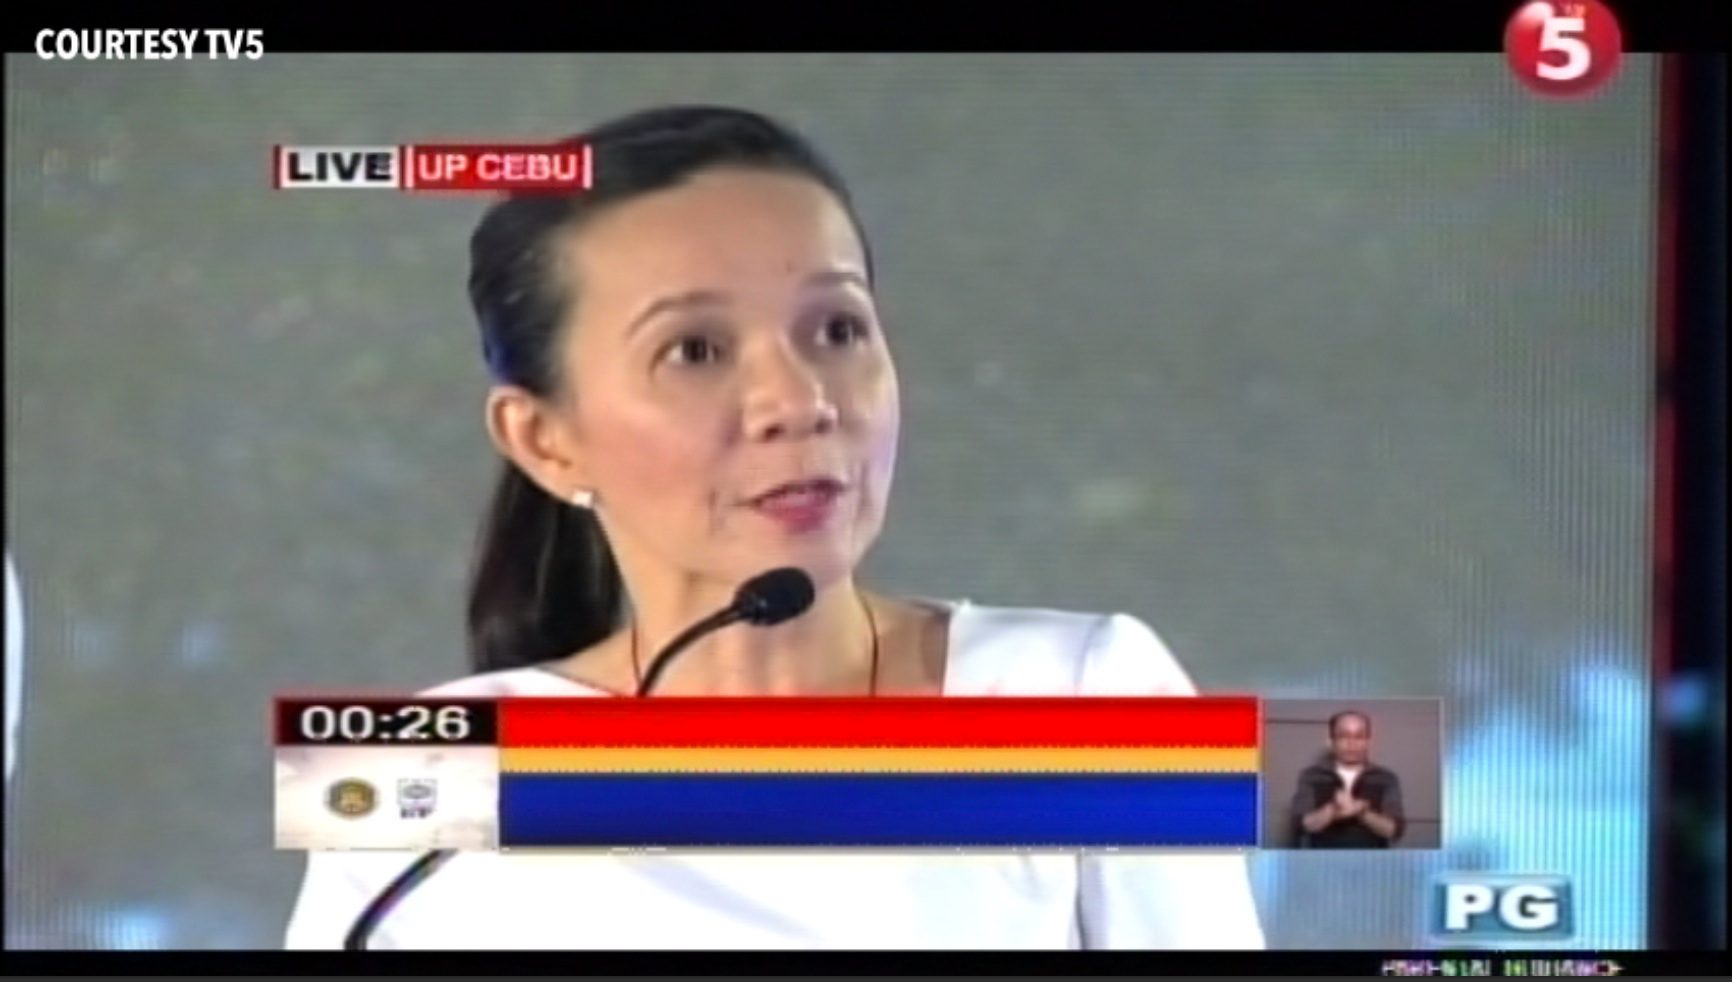 Grace Poe won Cebu presidential debate – SWS respondents